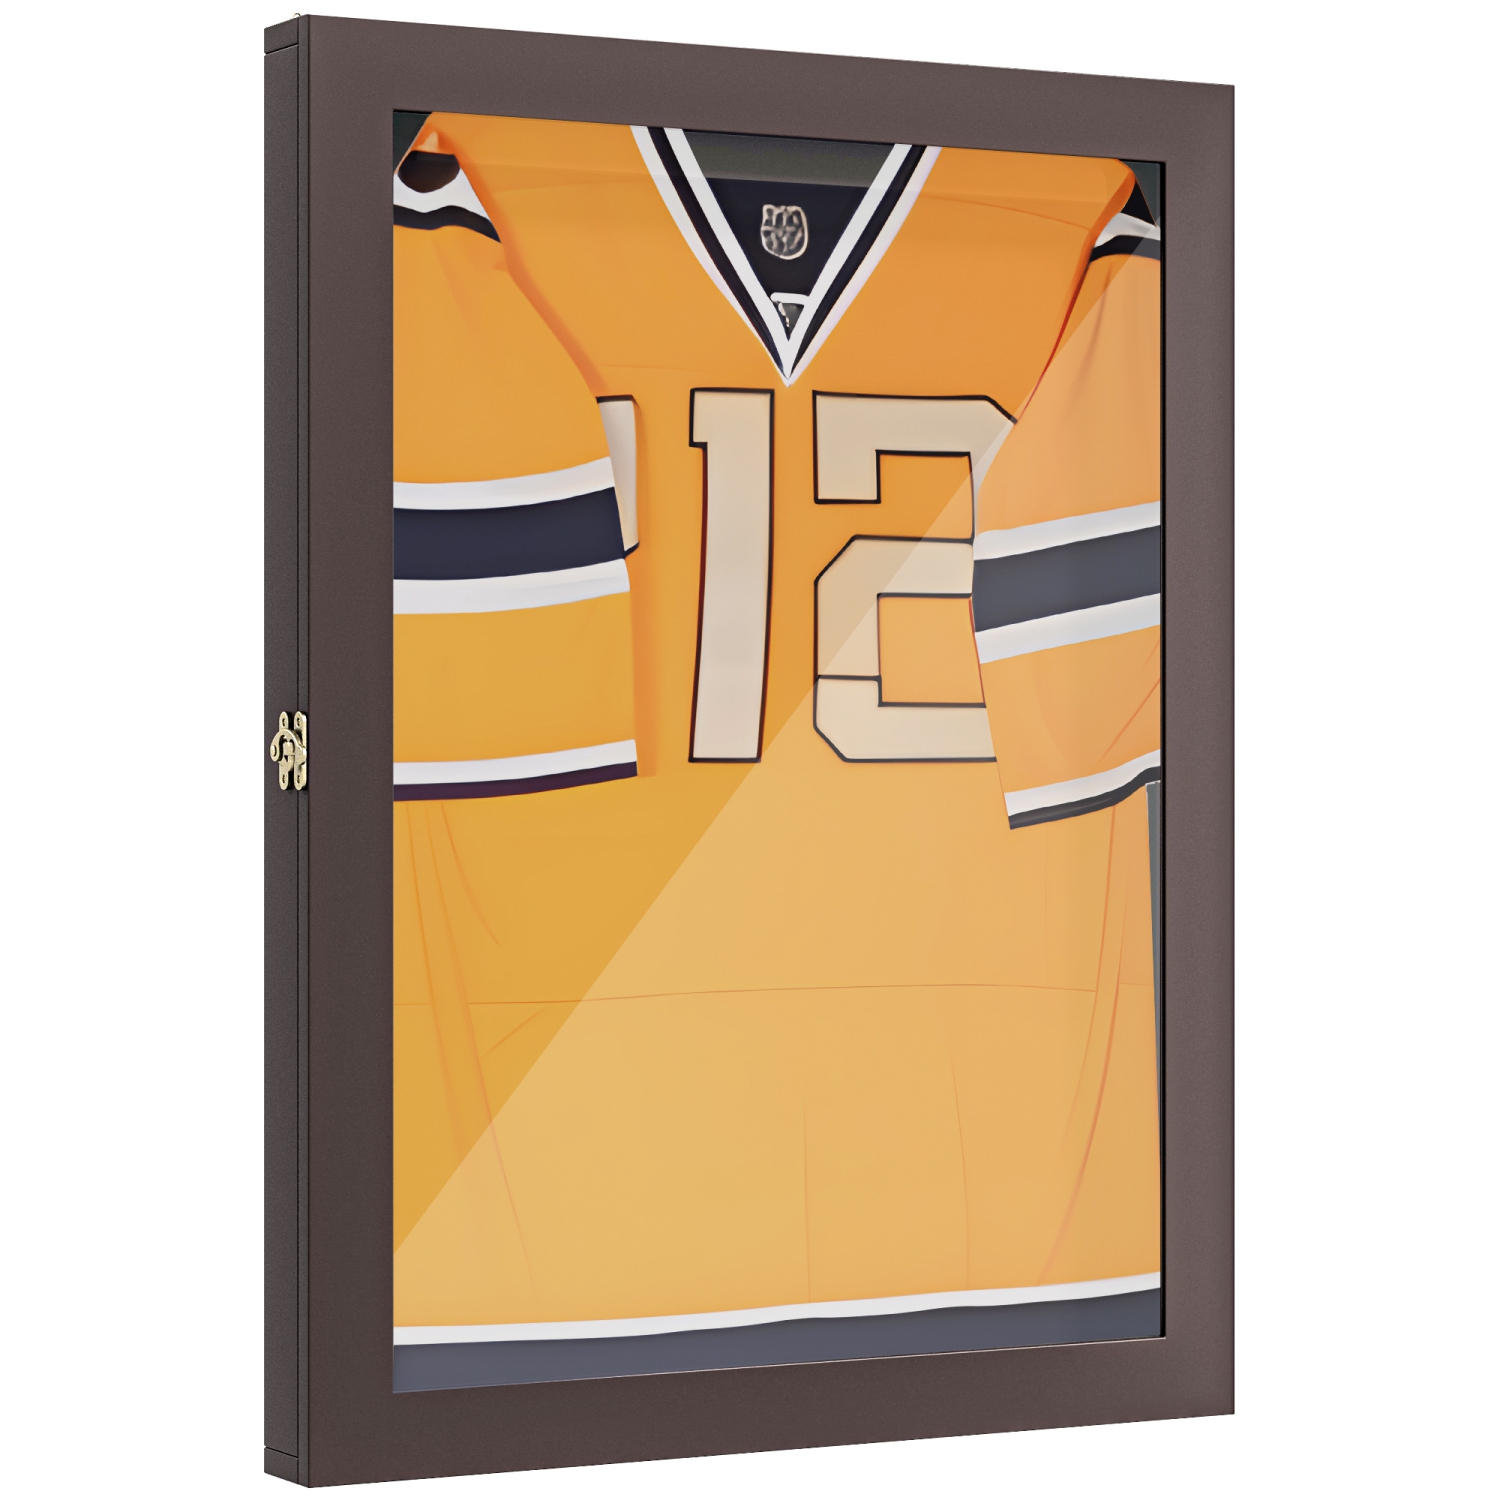 HOMCOM Jersey Display Frame Case, Acrylic Sports Shirt Shadow Box for Basketball Football Baseball (Brown, 24" W x 32" H)